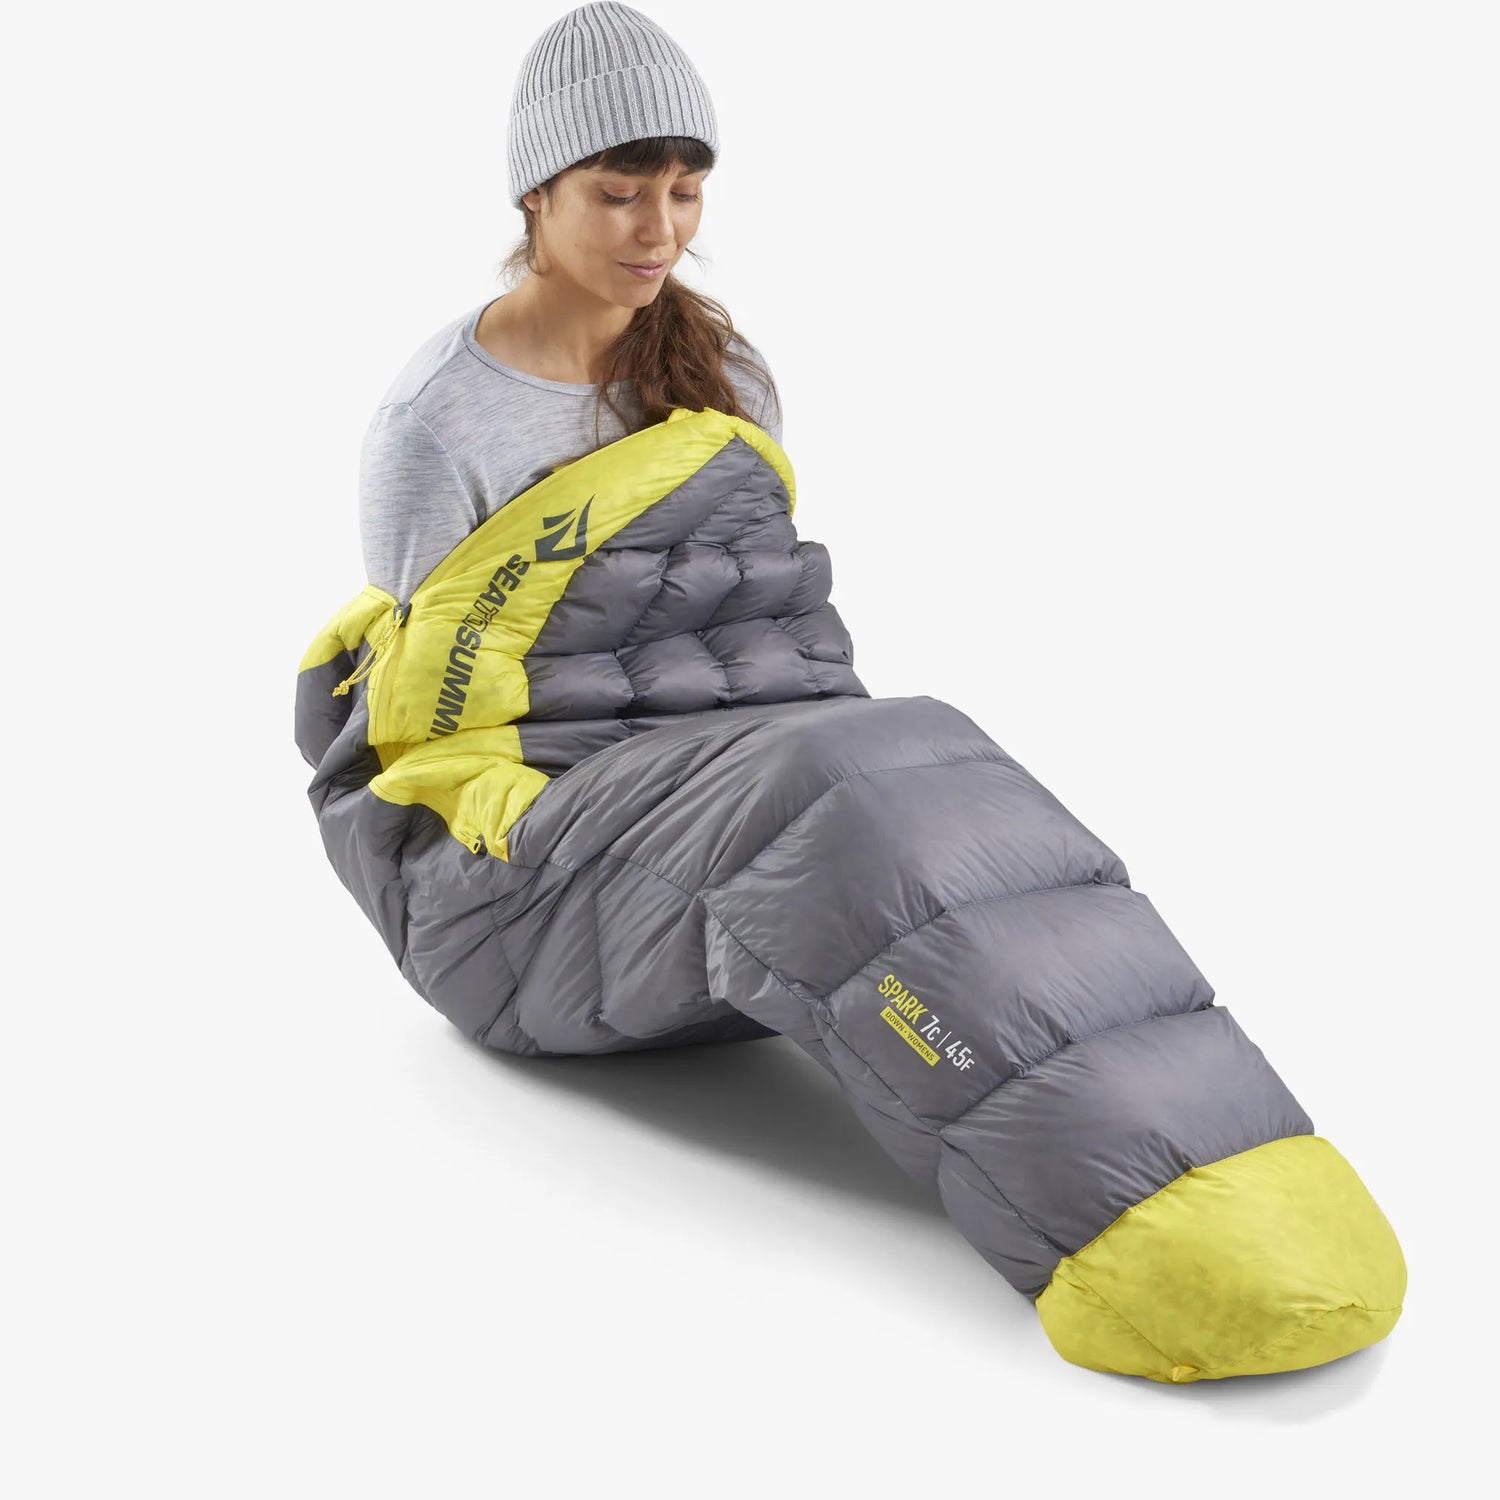 Spark Ultralight Women's Sleeping Bag (7°C, -1°C & -9°C)